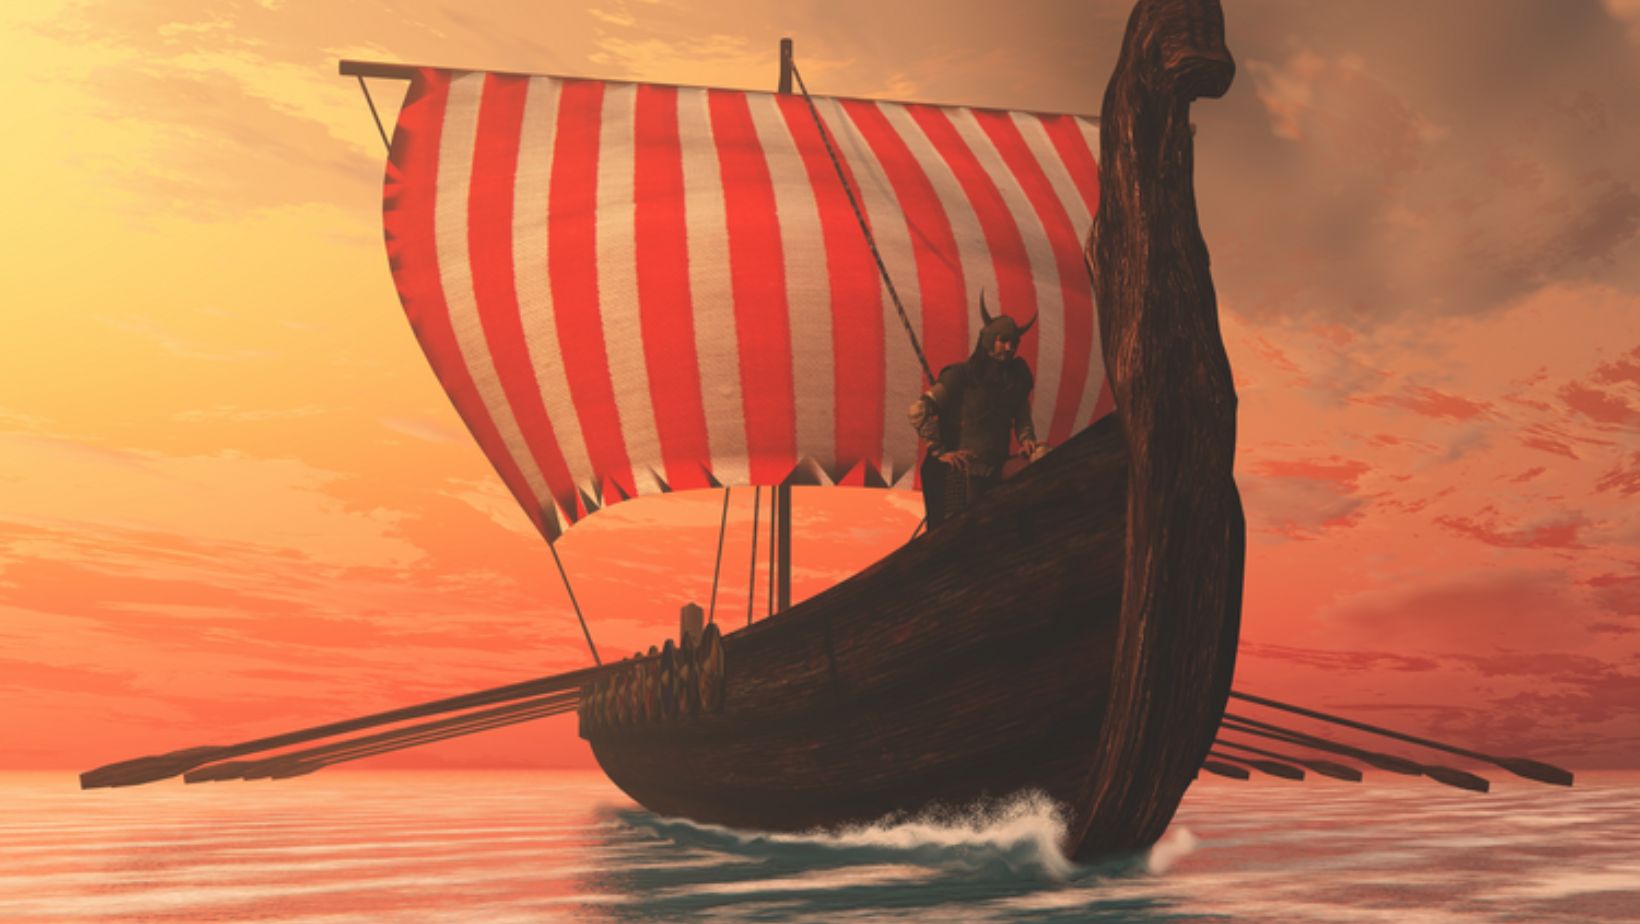 Why were Viking Ships So Advanced?